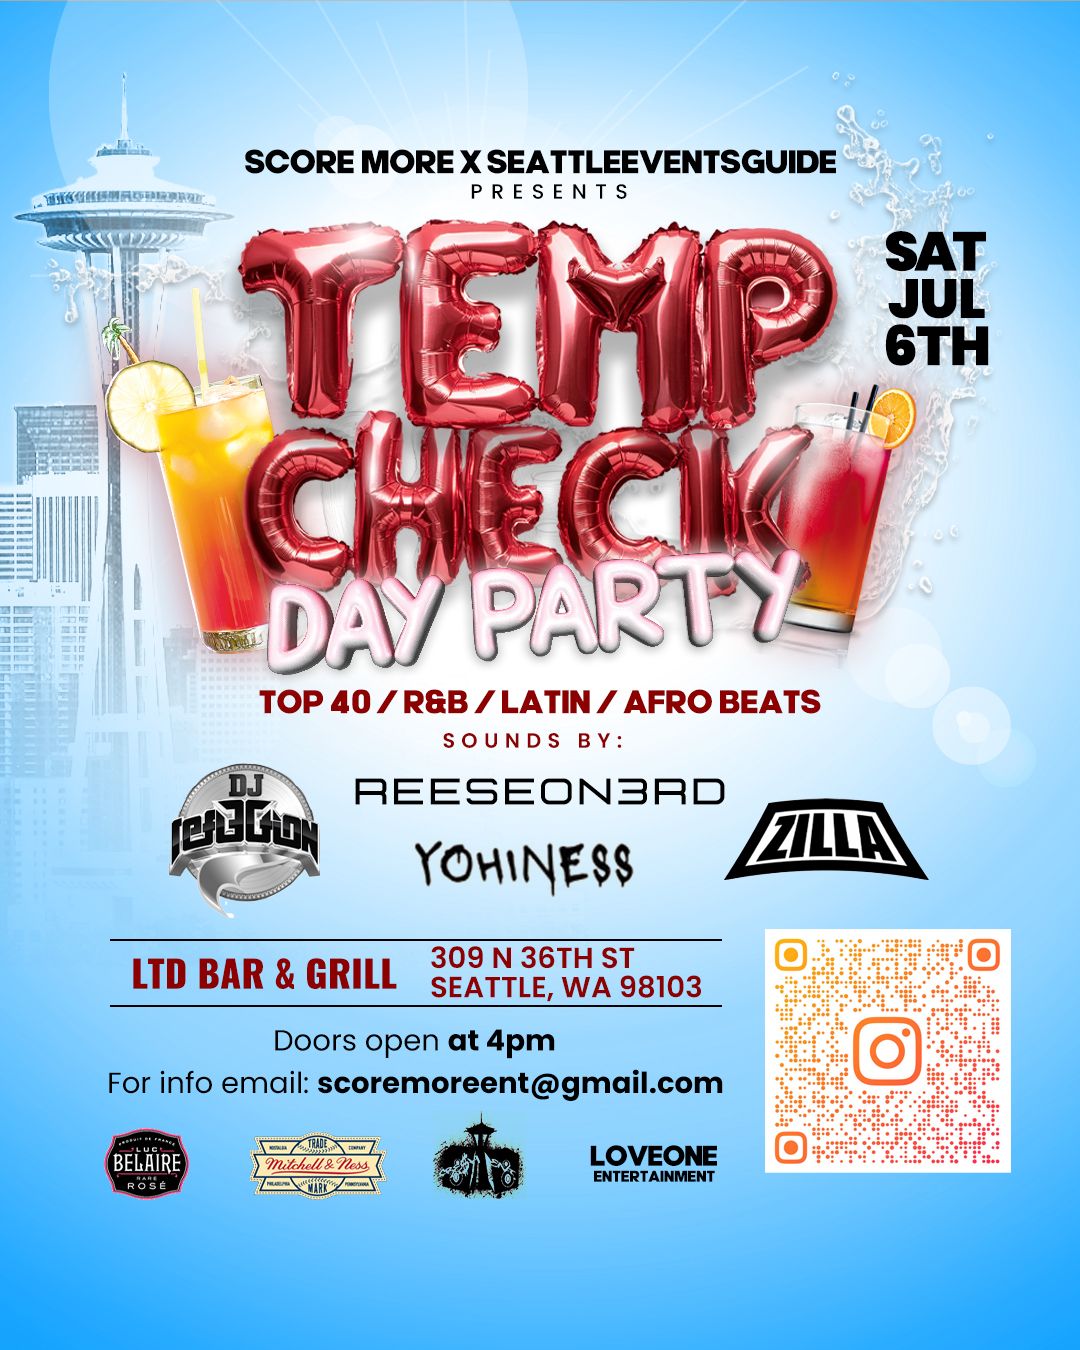 Temp Check Day Party @ LTD 